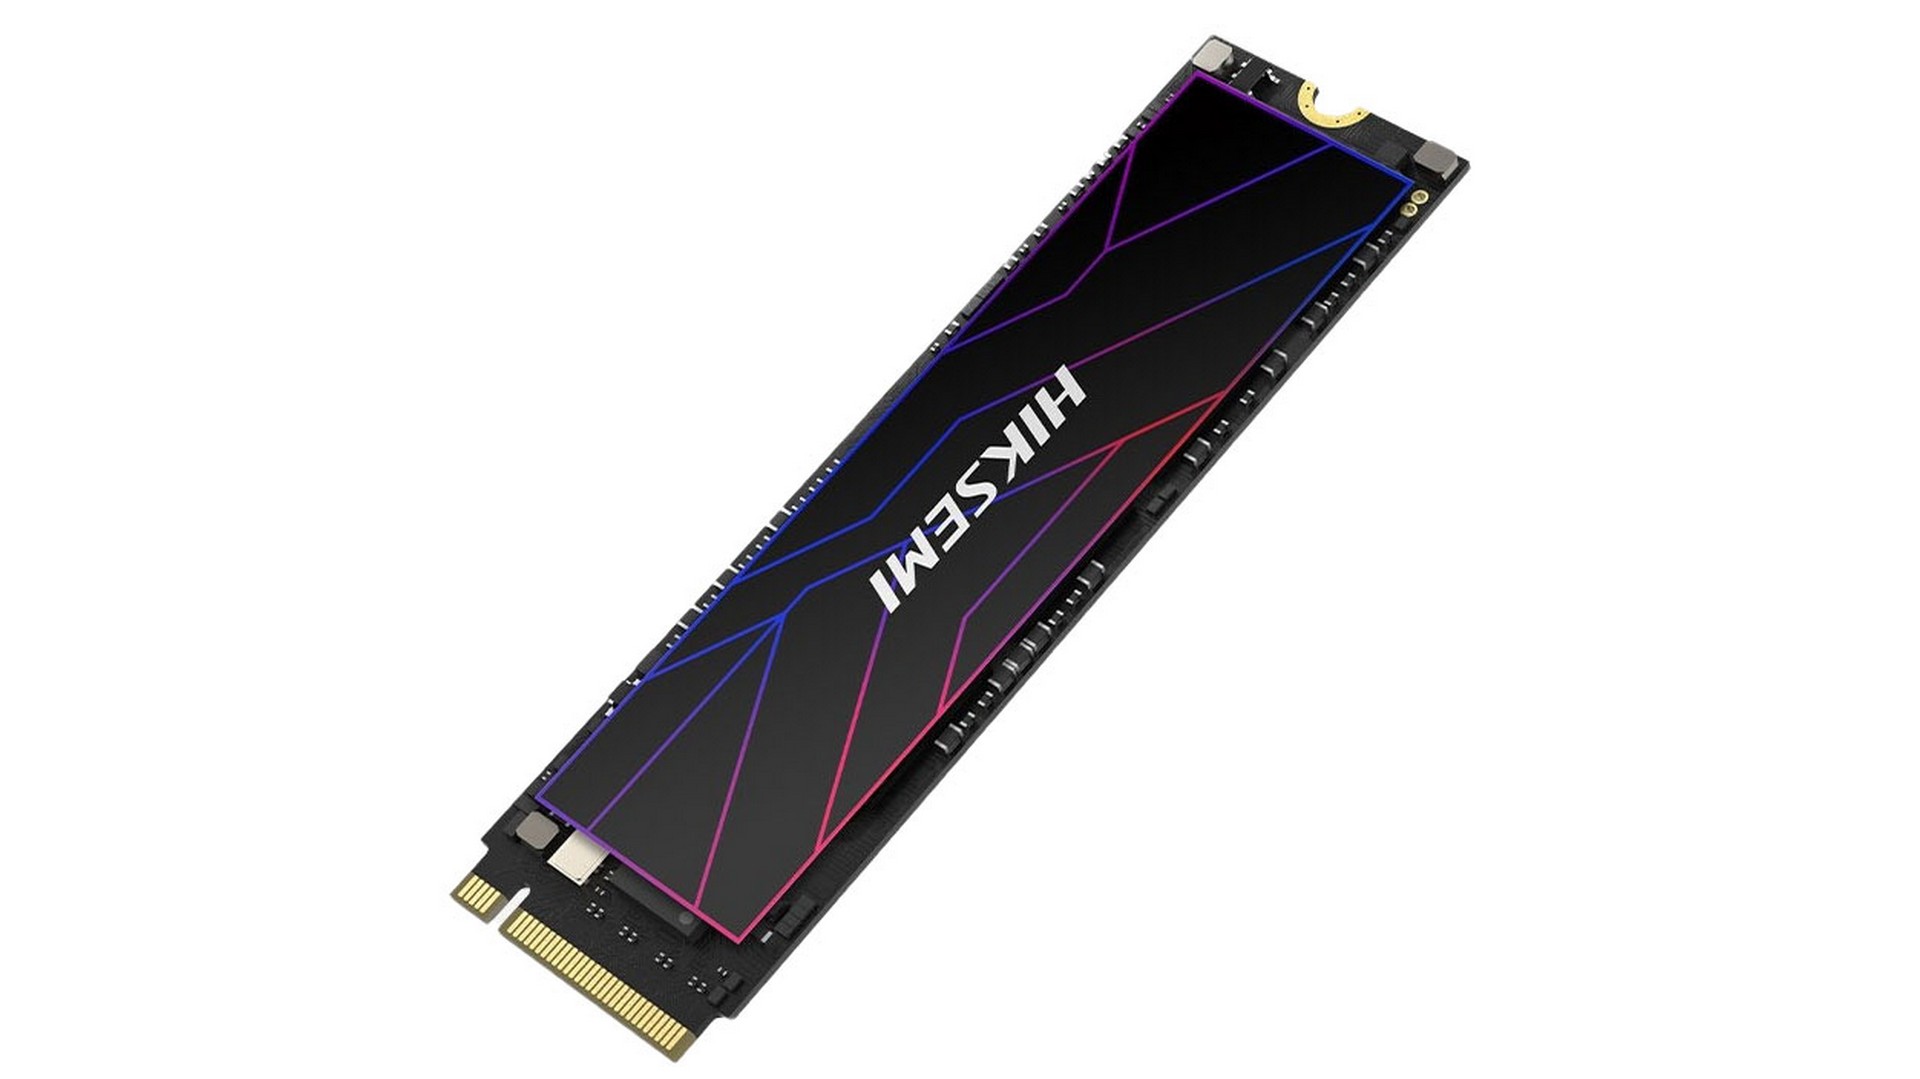 Ổ cứng SSD HIKSEMI FUTURE ECO 512GB M.2 NVMe M.2 2280 PCIe Gen4 x 4